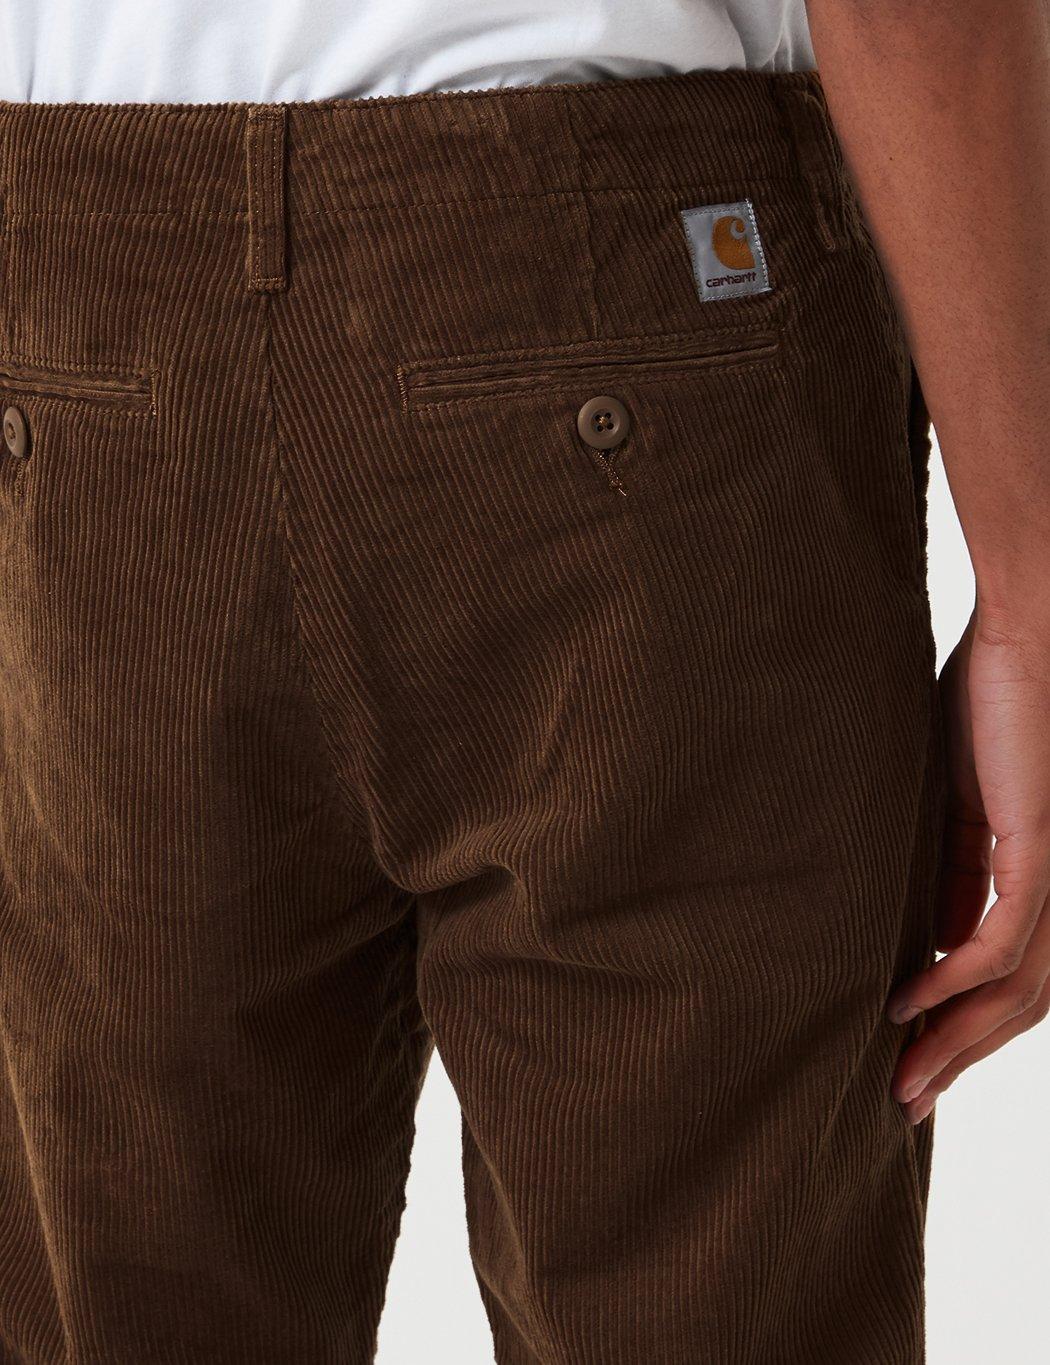 Carhartt Wip Club Pant Trousers (corduroy) in Brown for Men - Lyst